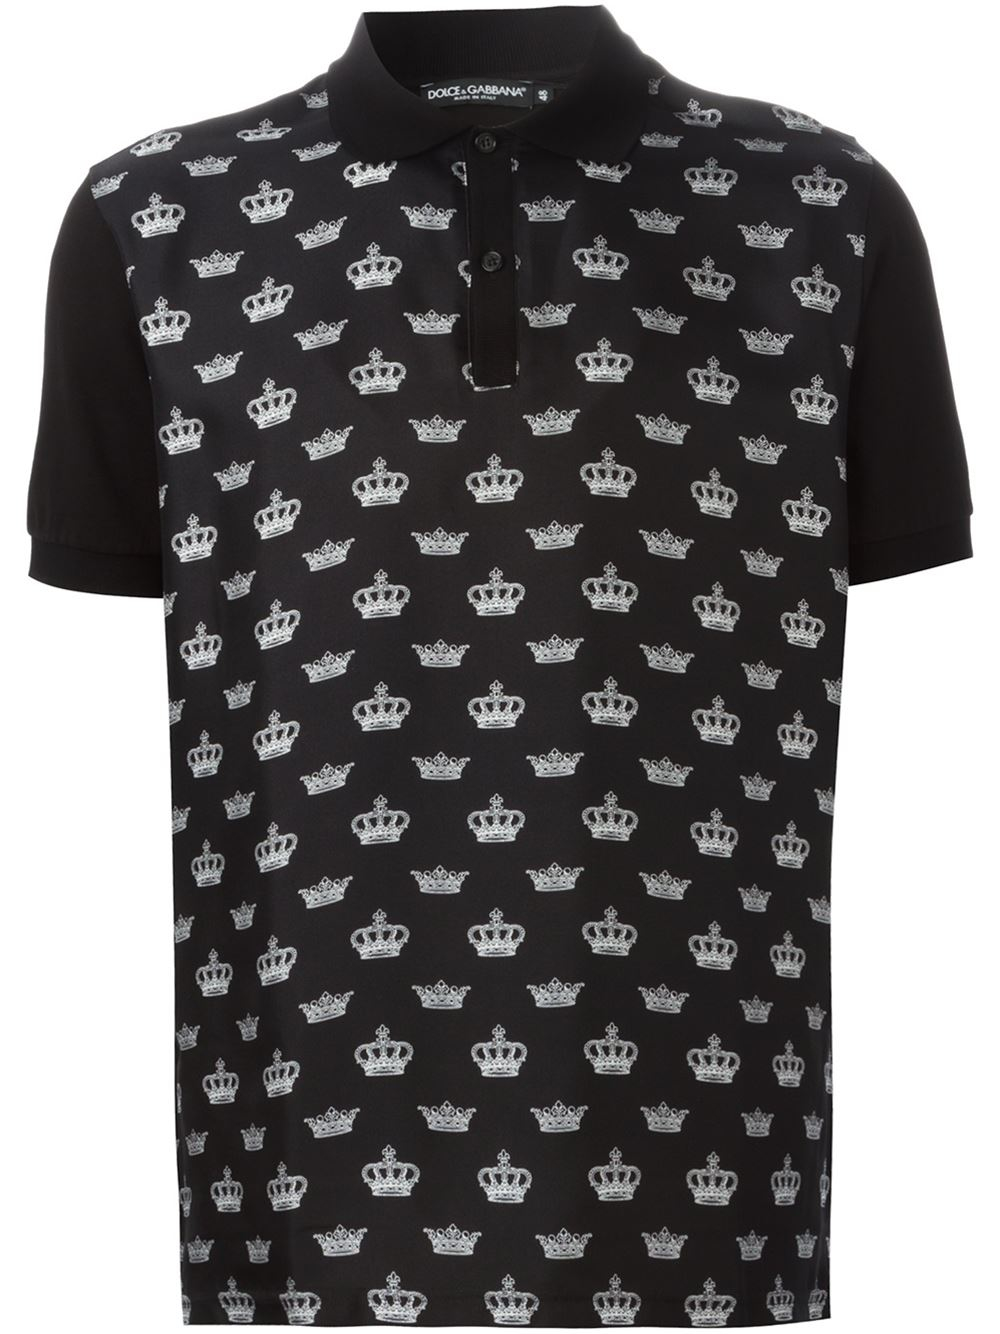 Lyst - Dolce & Gabbana Crown Print Polo Shirt in Black for Men